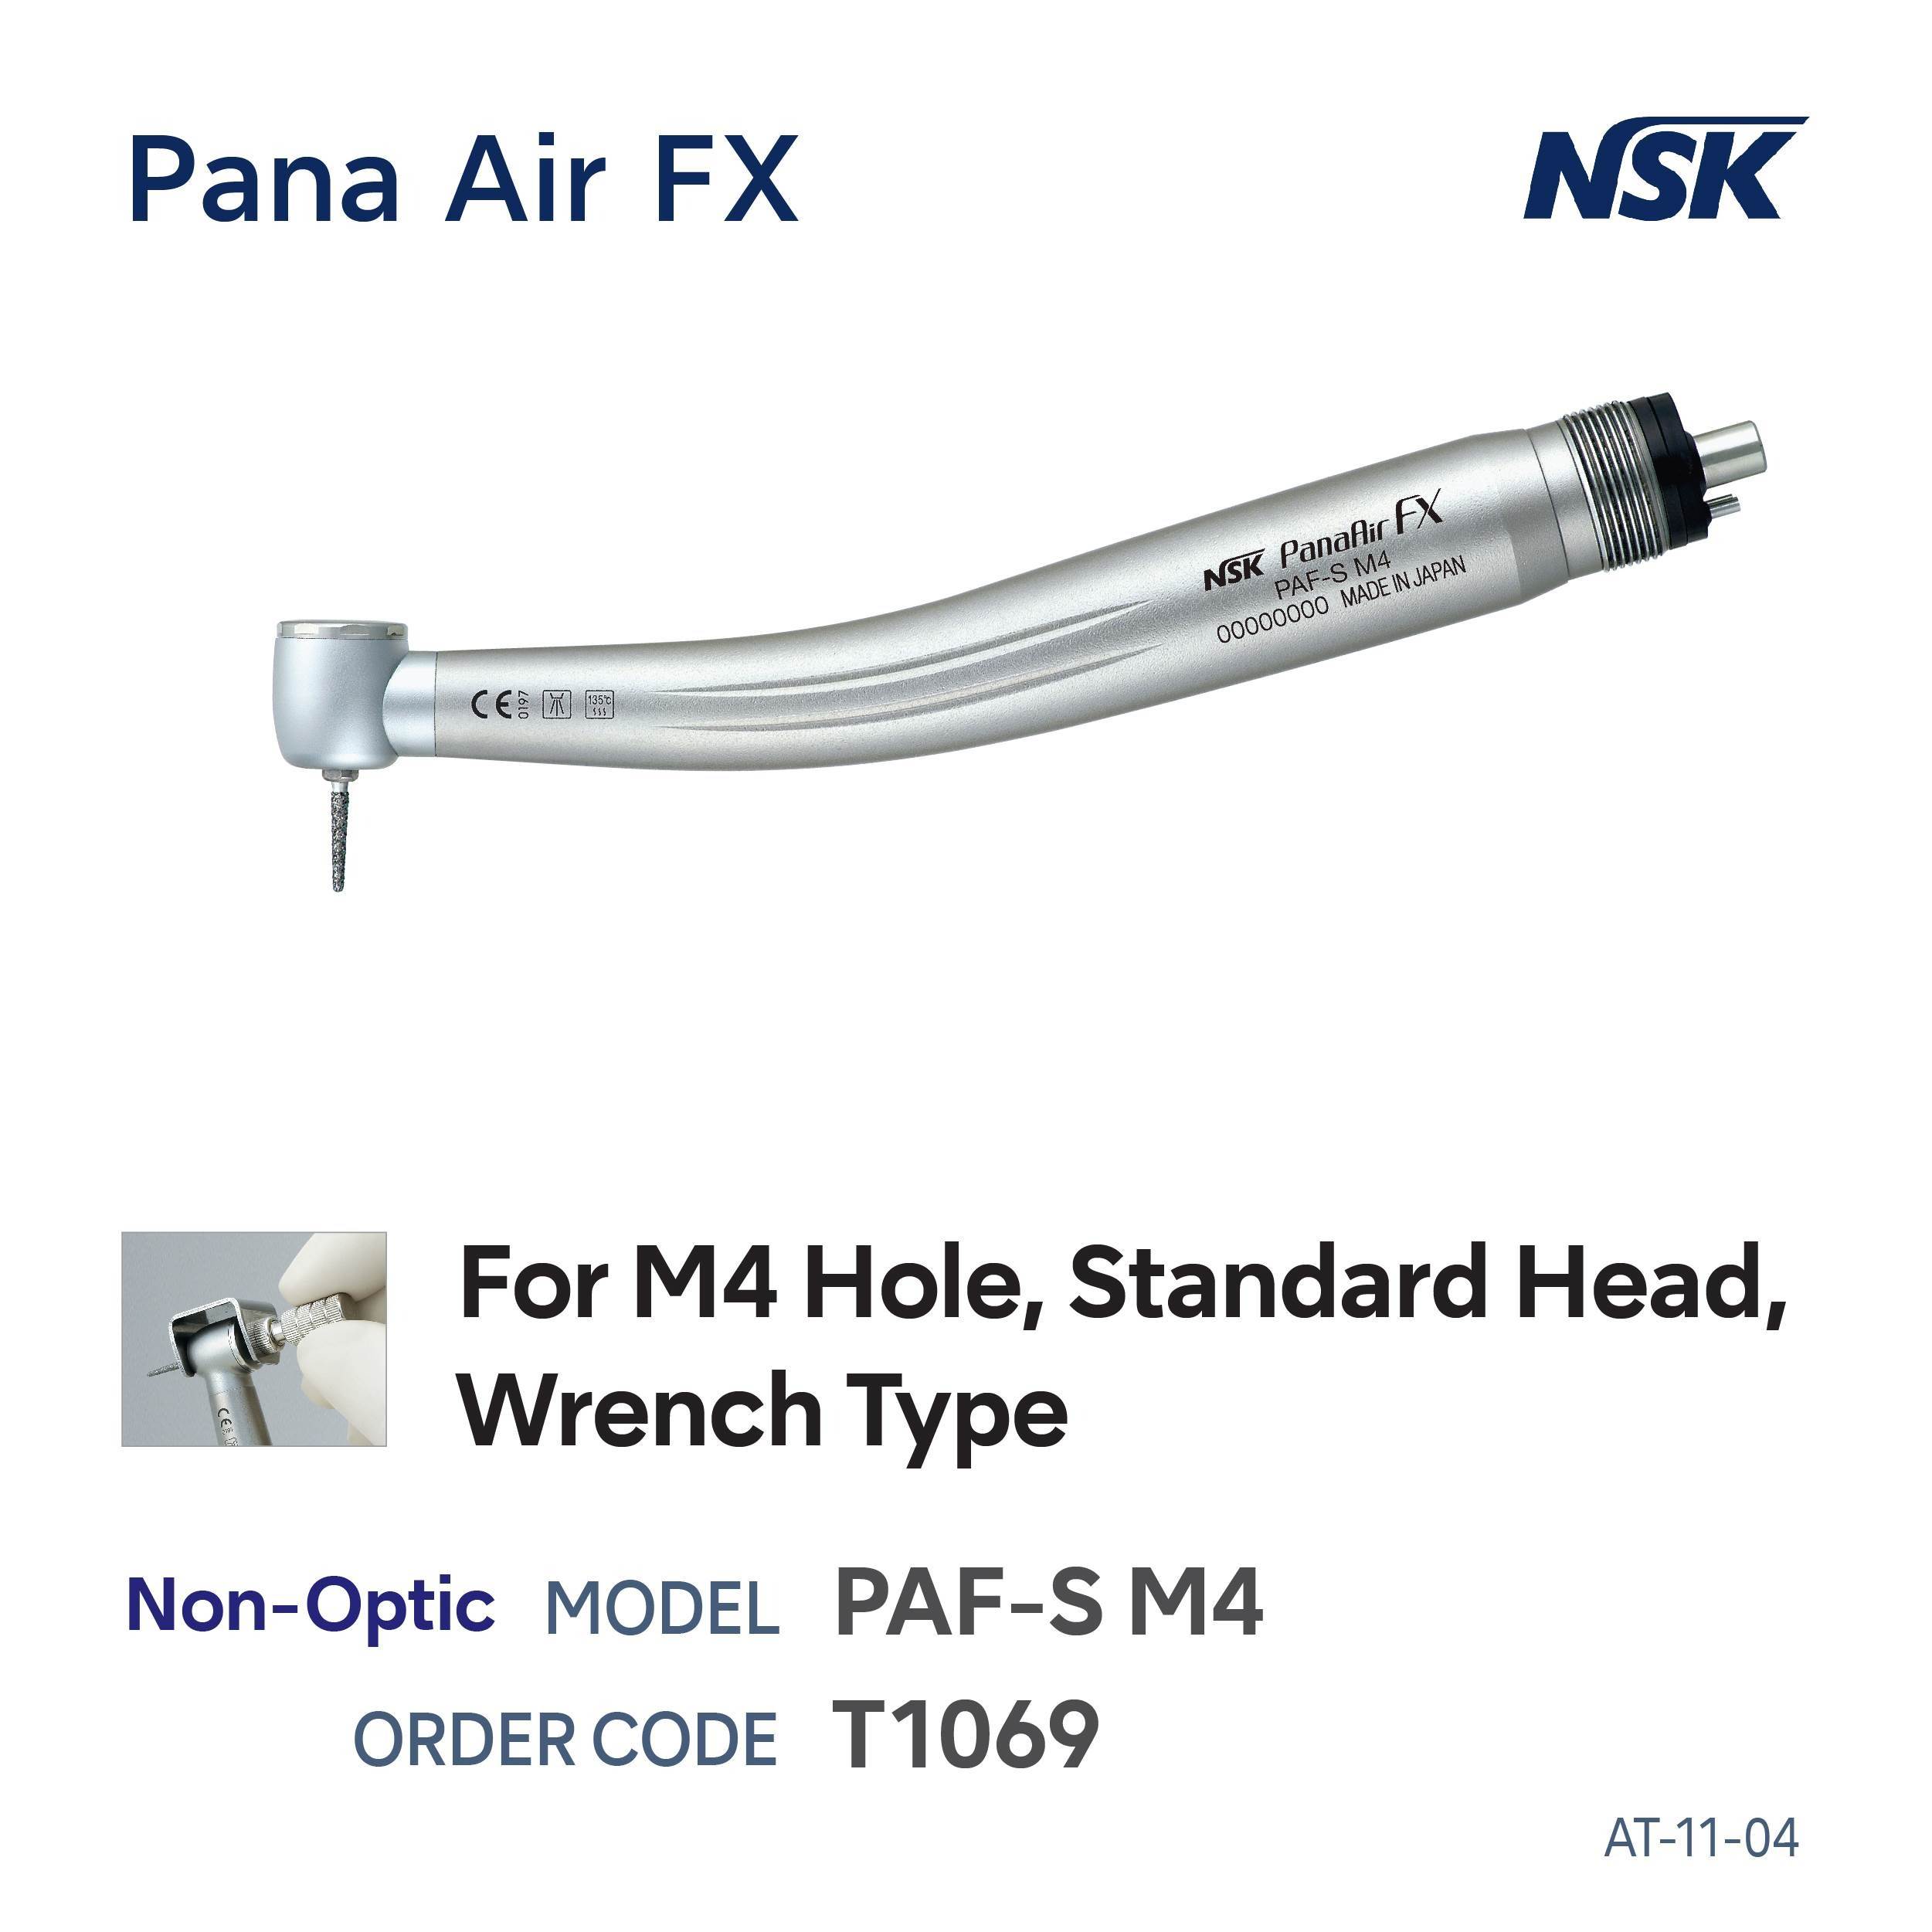 PANA AIR FX S M4 HANDPIECE